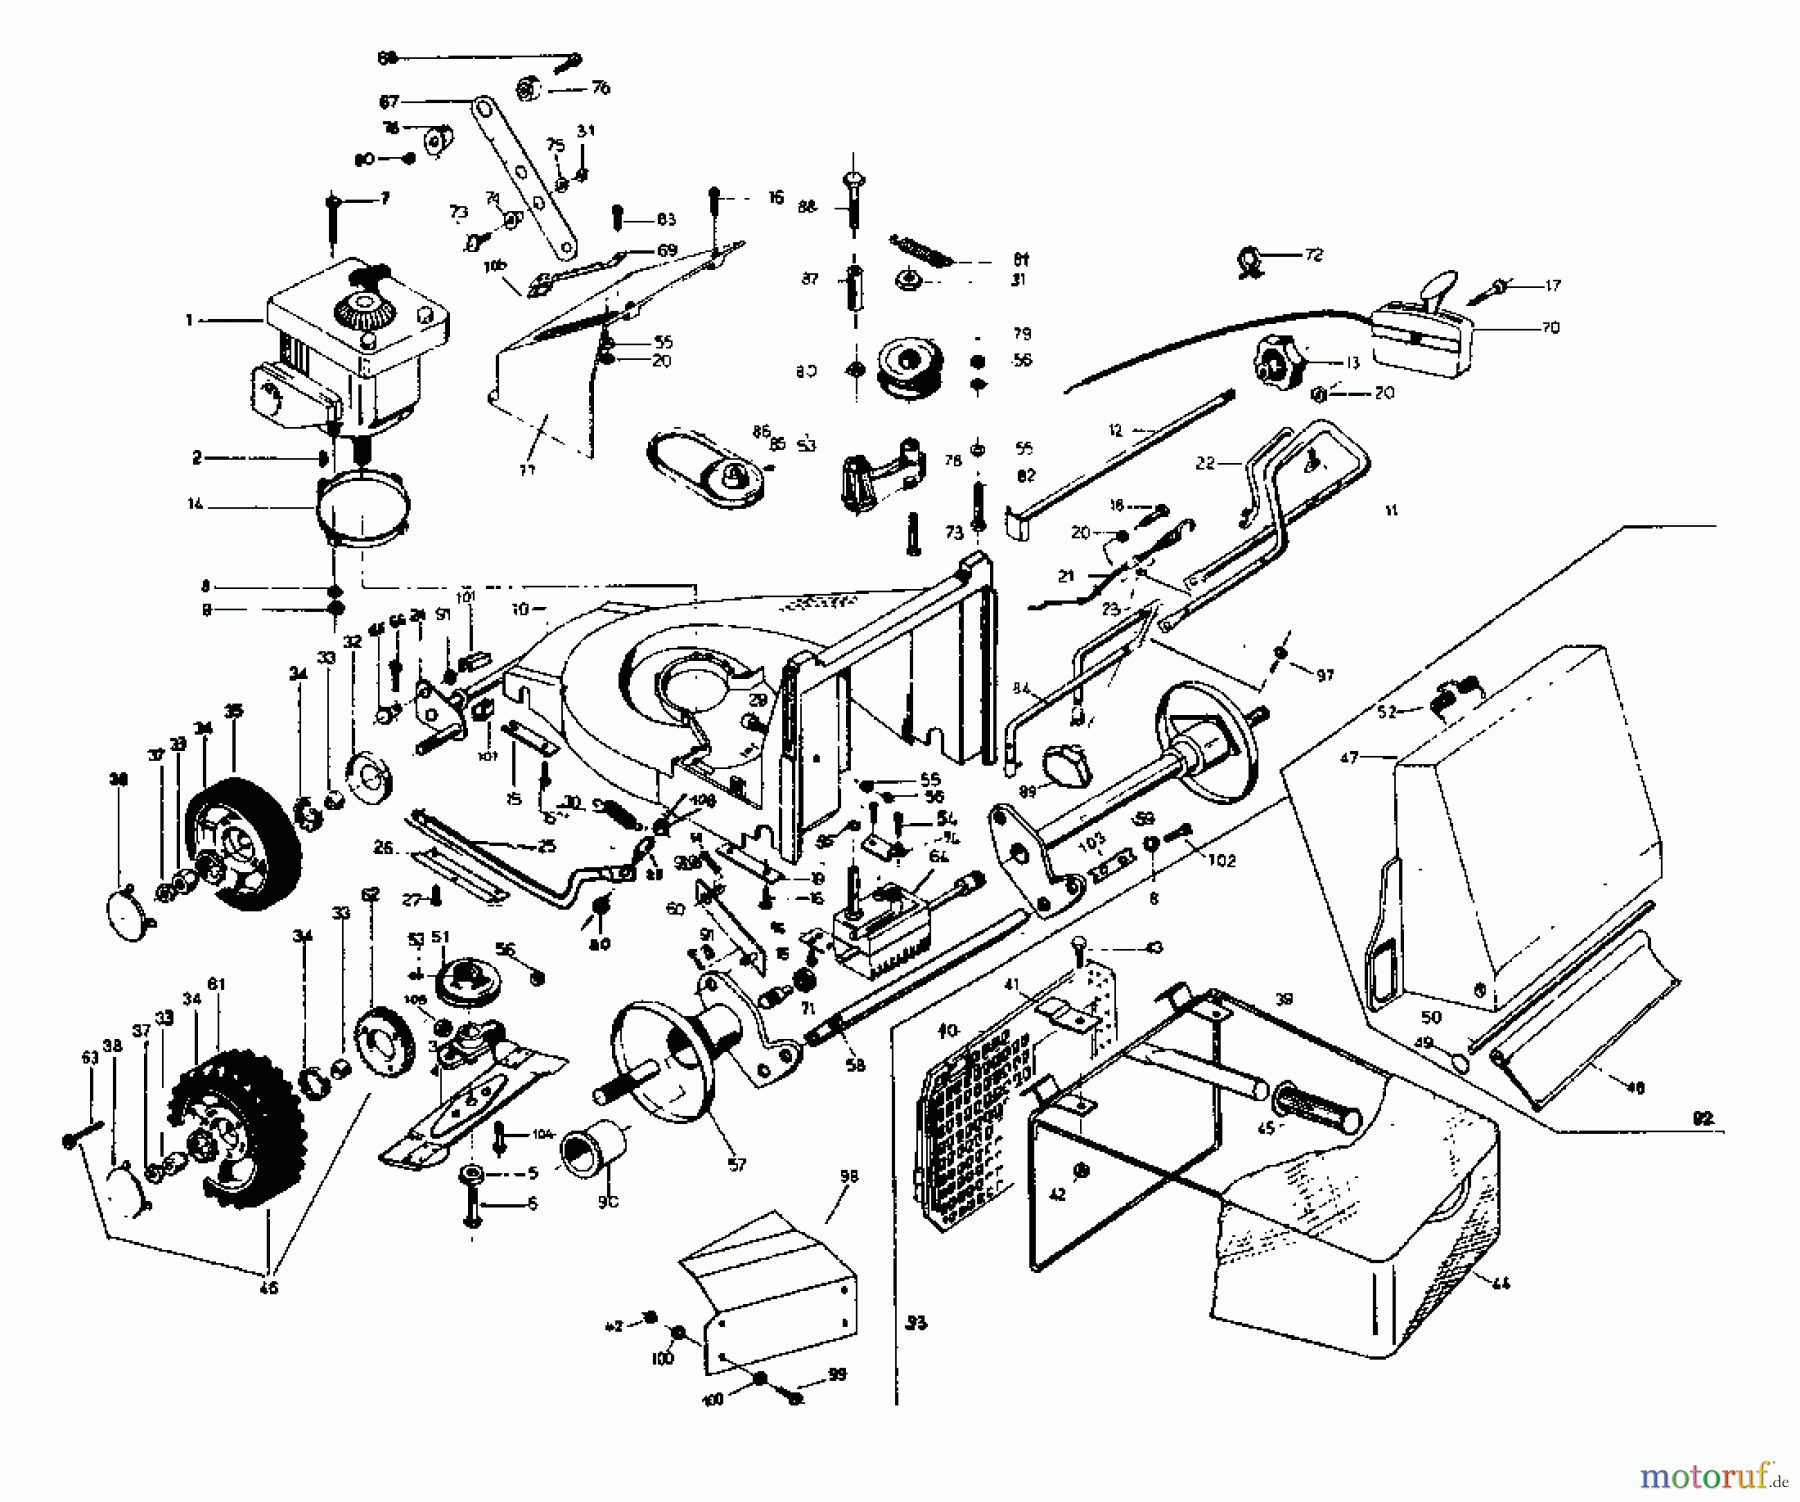  Rotaro Tondeuse thermique tractée ROTARO  48 S 181-0157  (1991) Machine de base